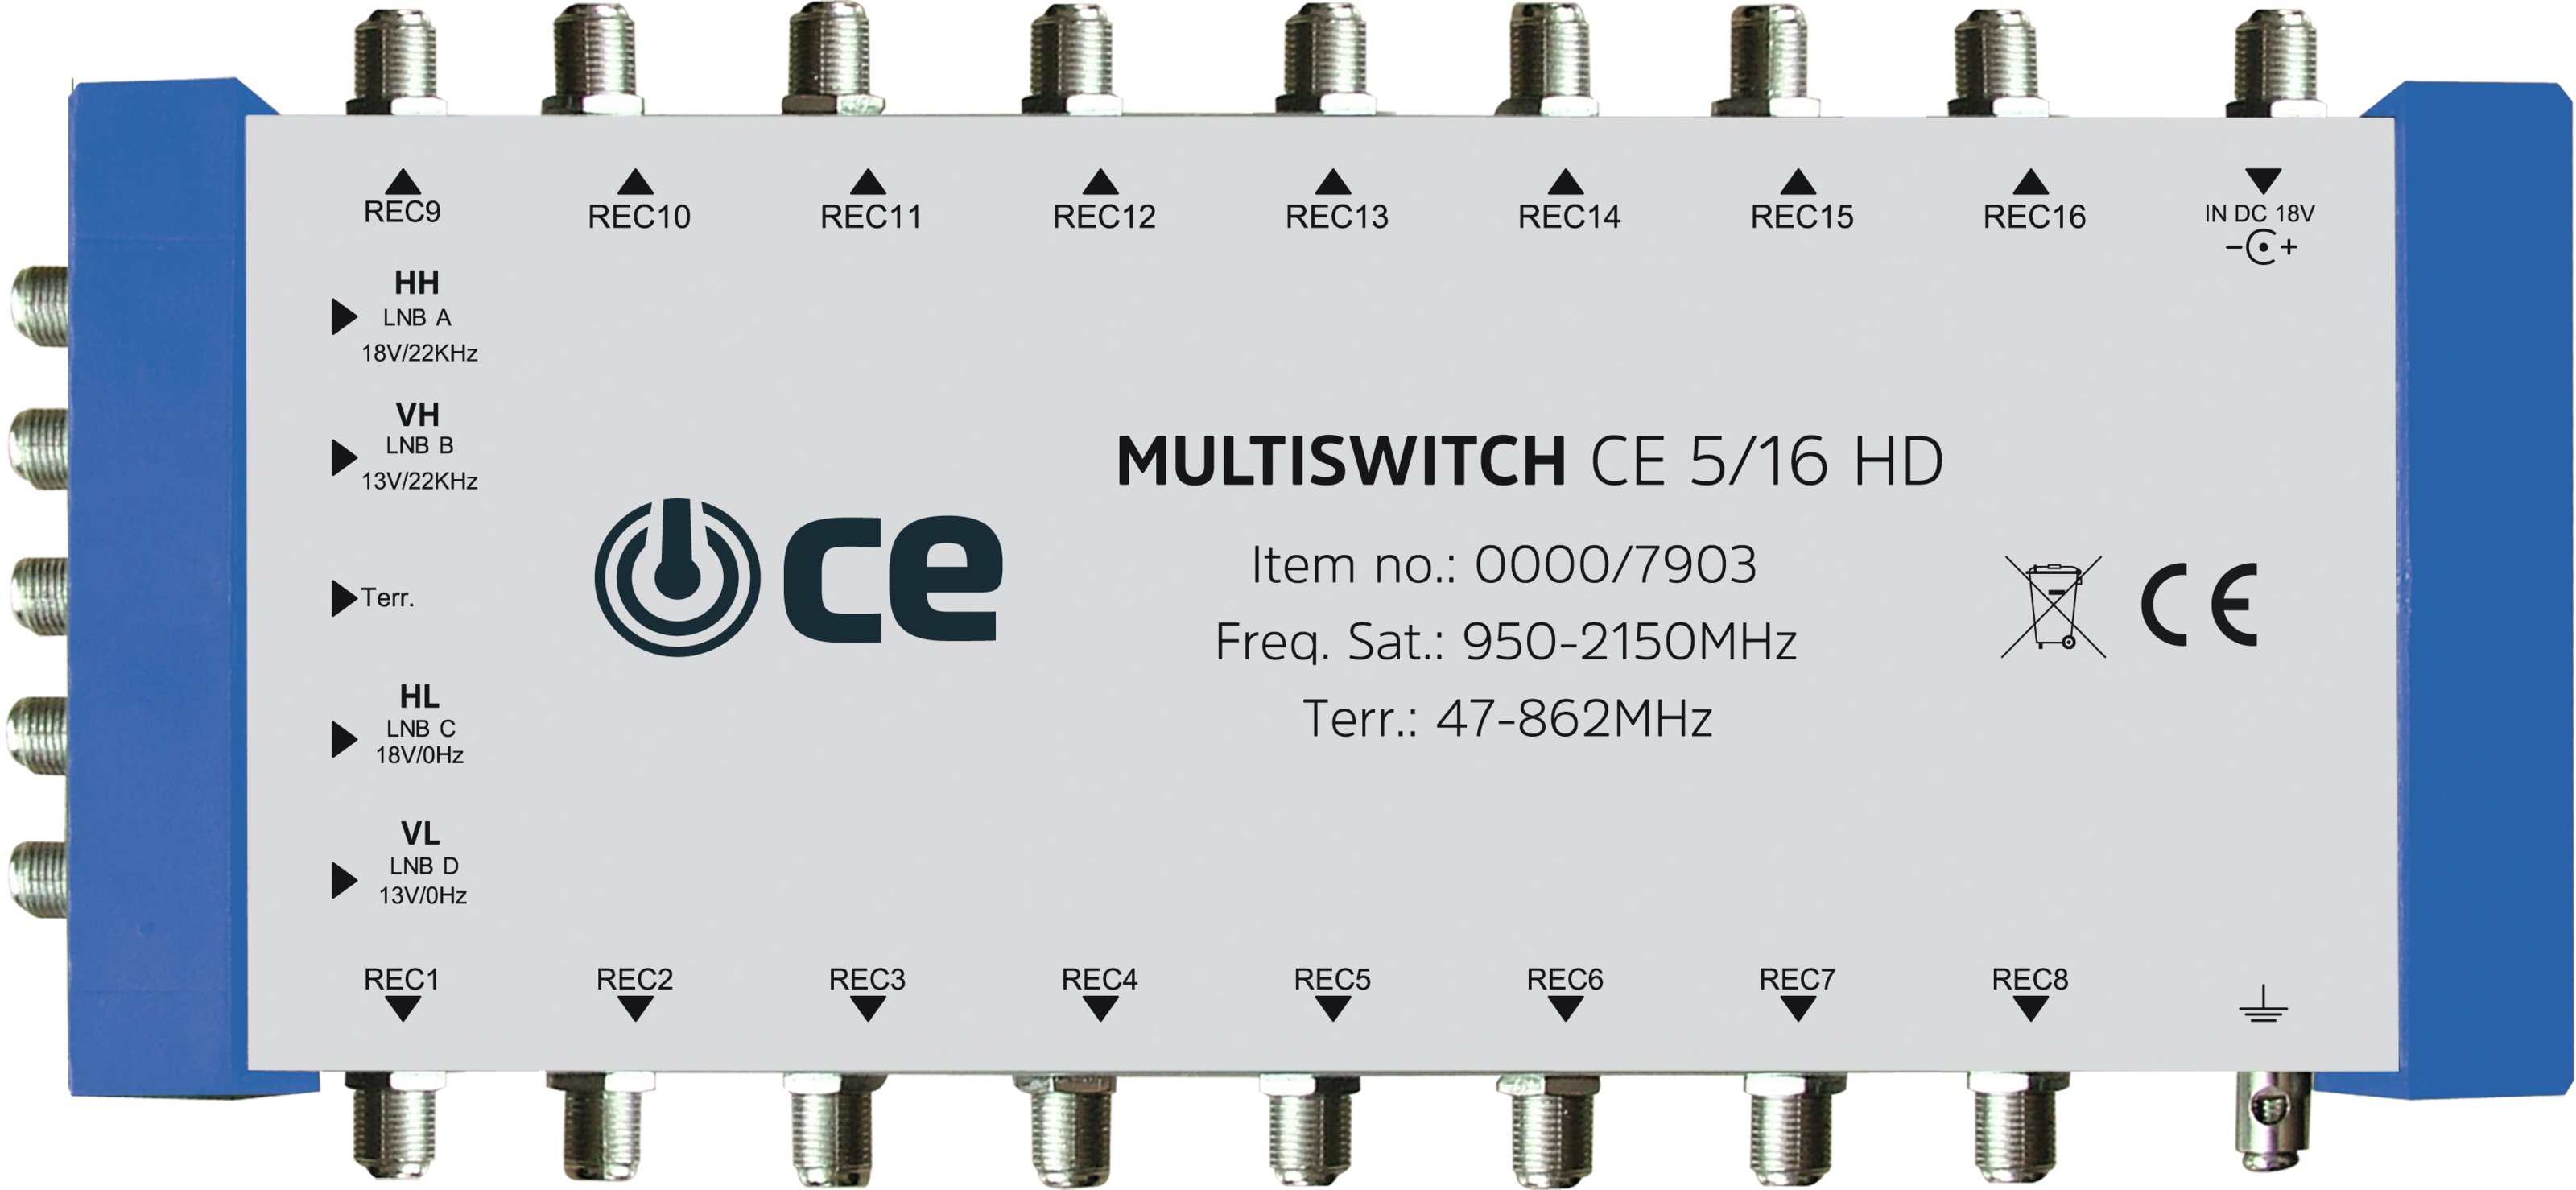 Multiswitch CE 5/16 HD